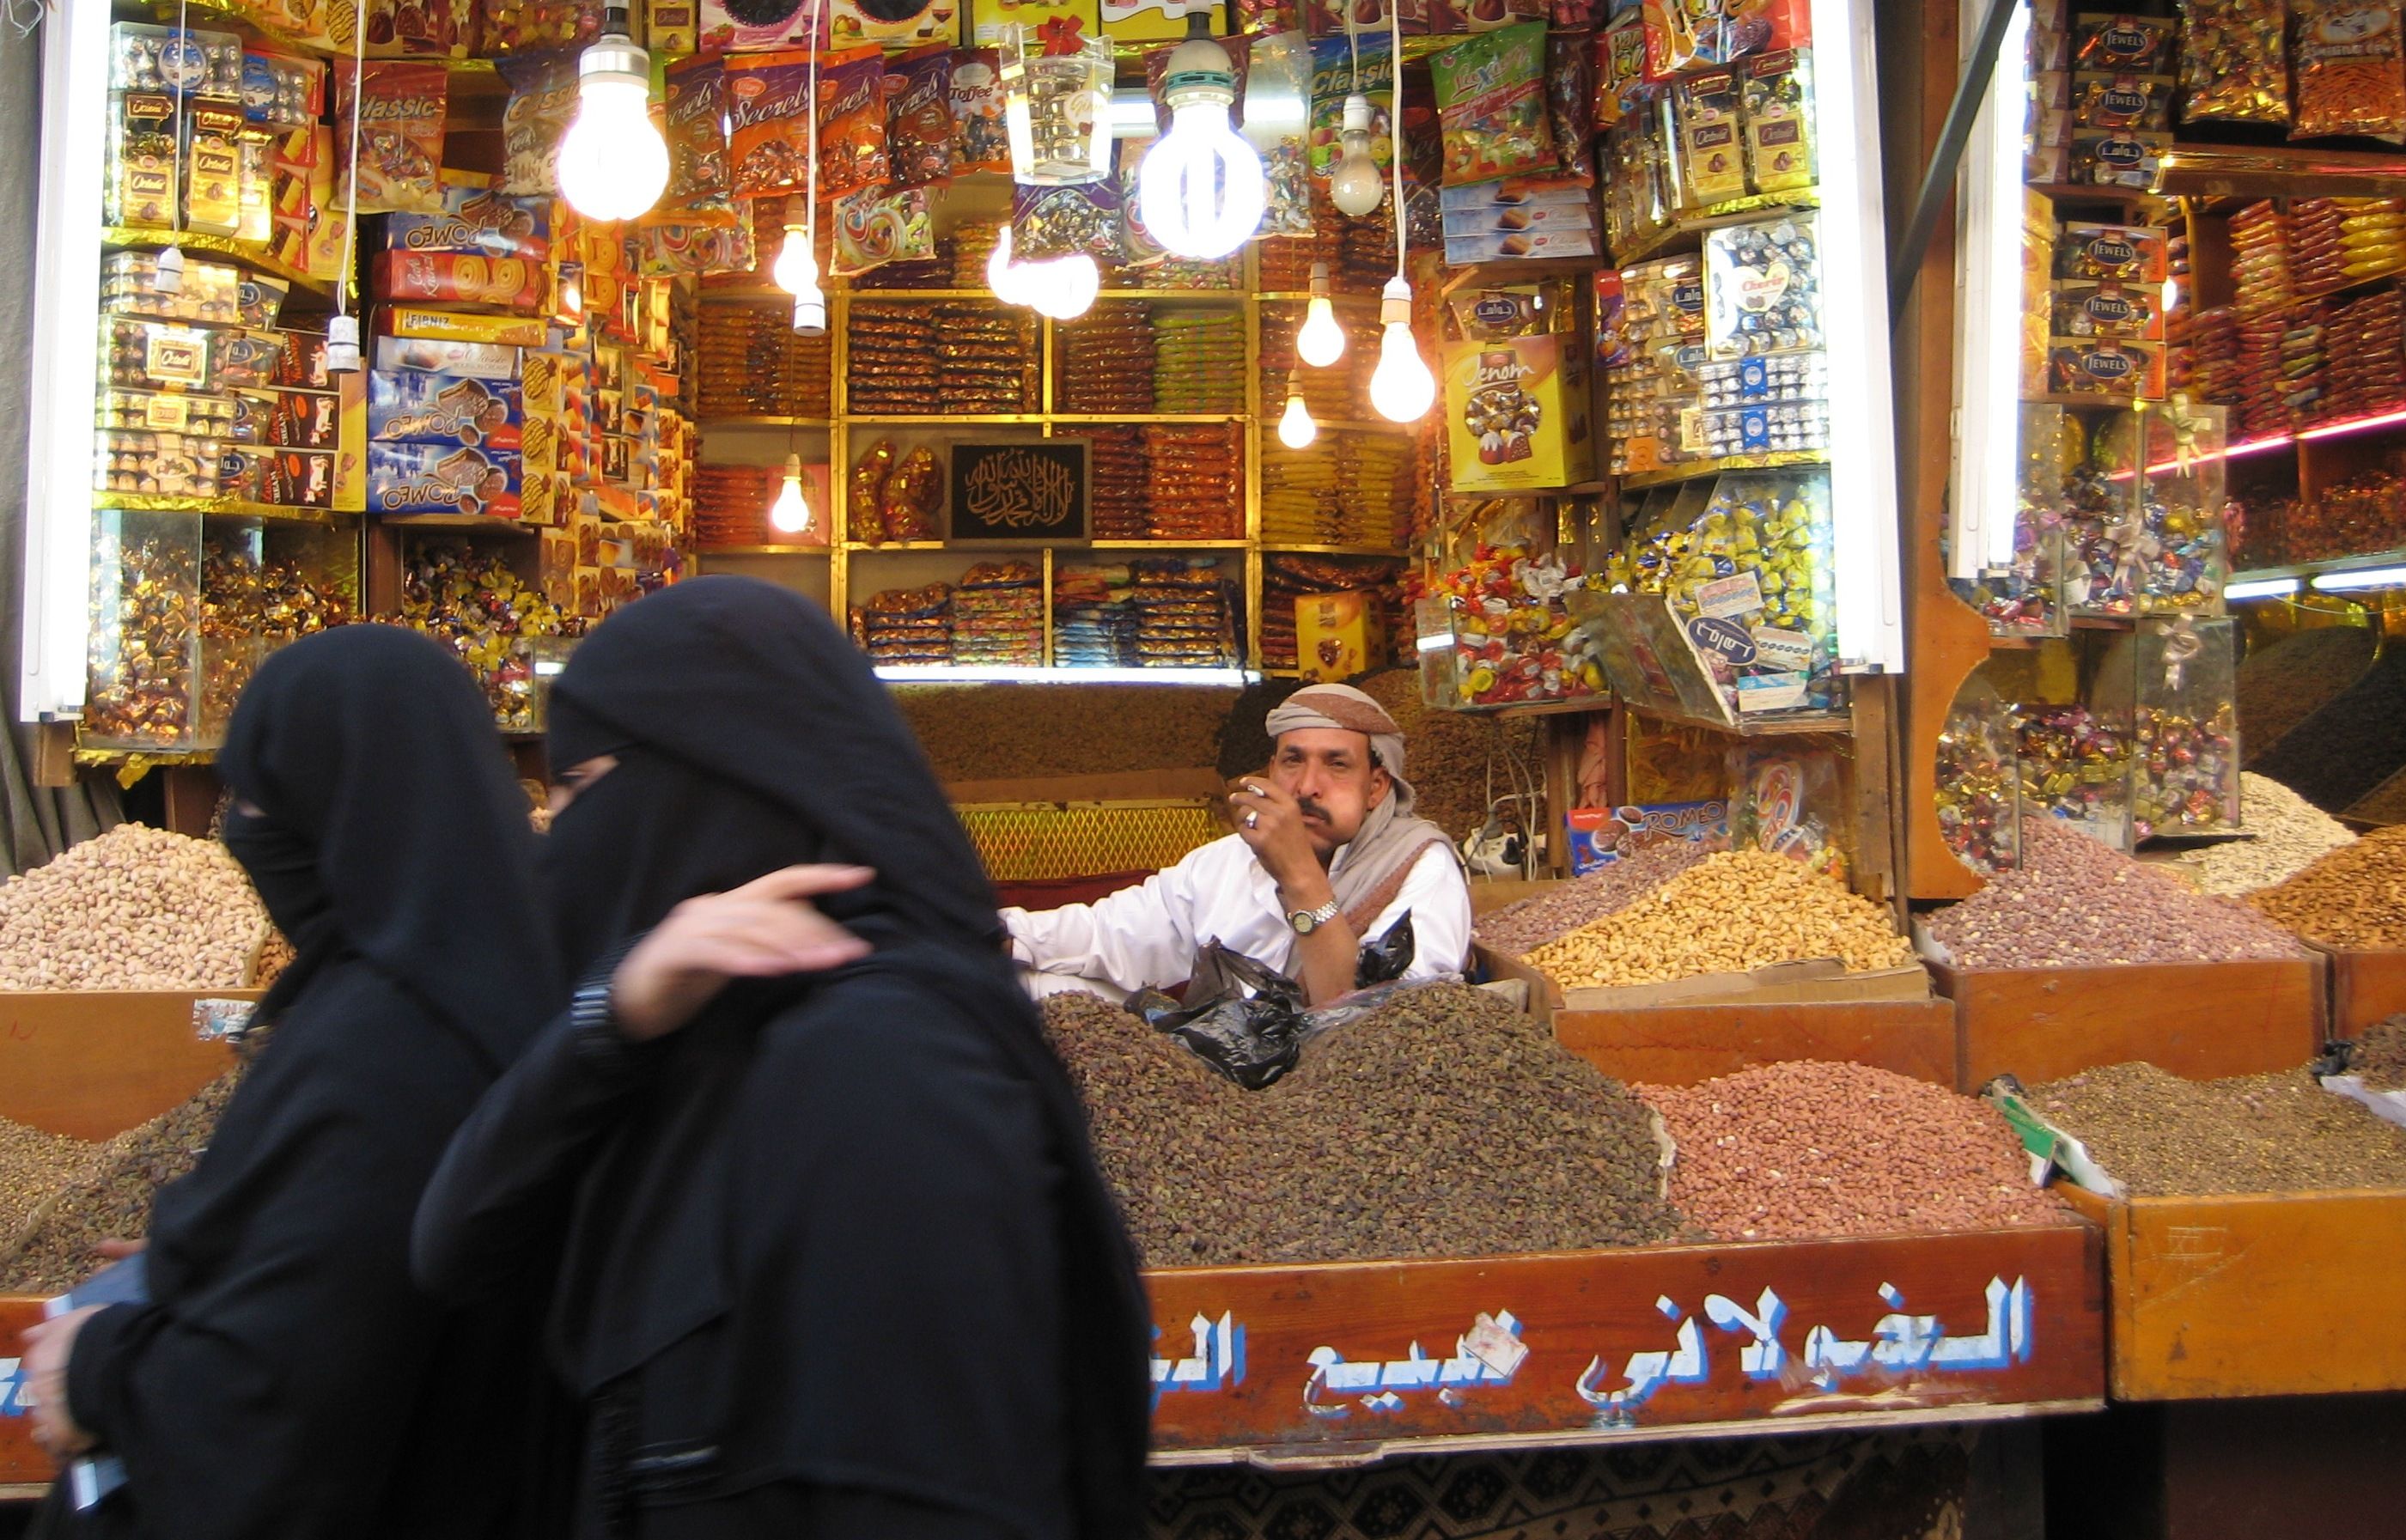 blog 61-1 Yemen-Sana'a-Spice seller chewing qat